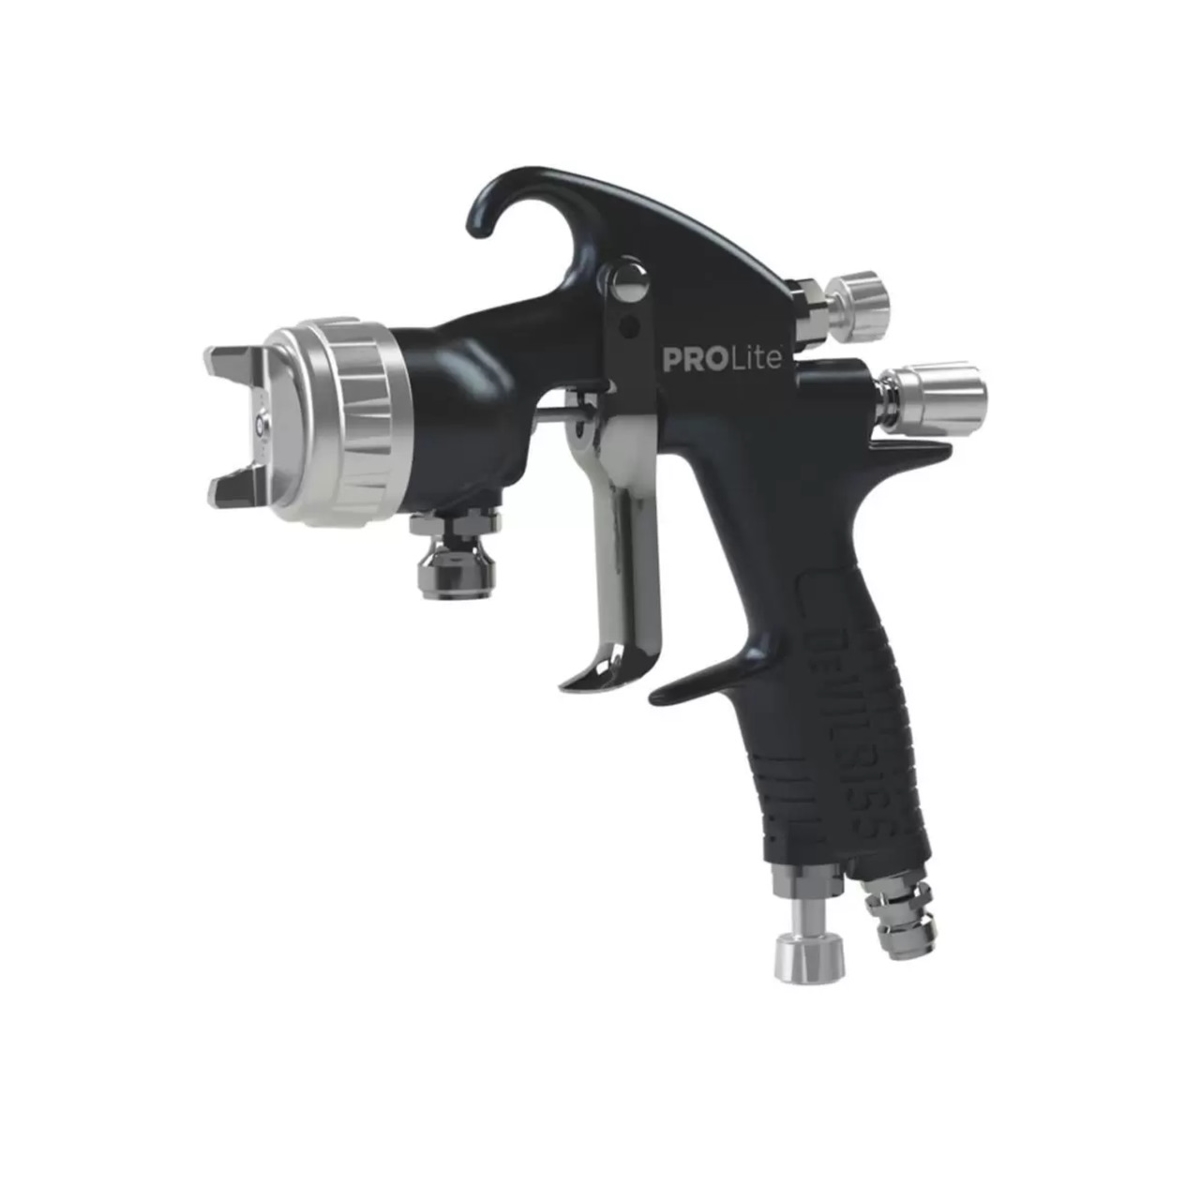 DEV-905131 1.4 mm Nozzle Pressure Feed Spray Guns -  DeVilbiss